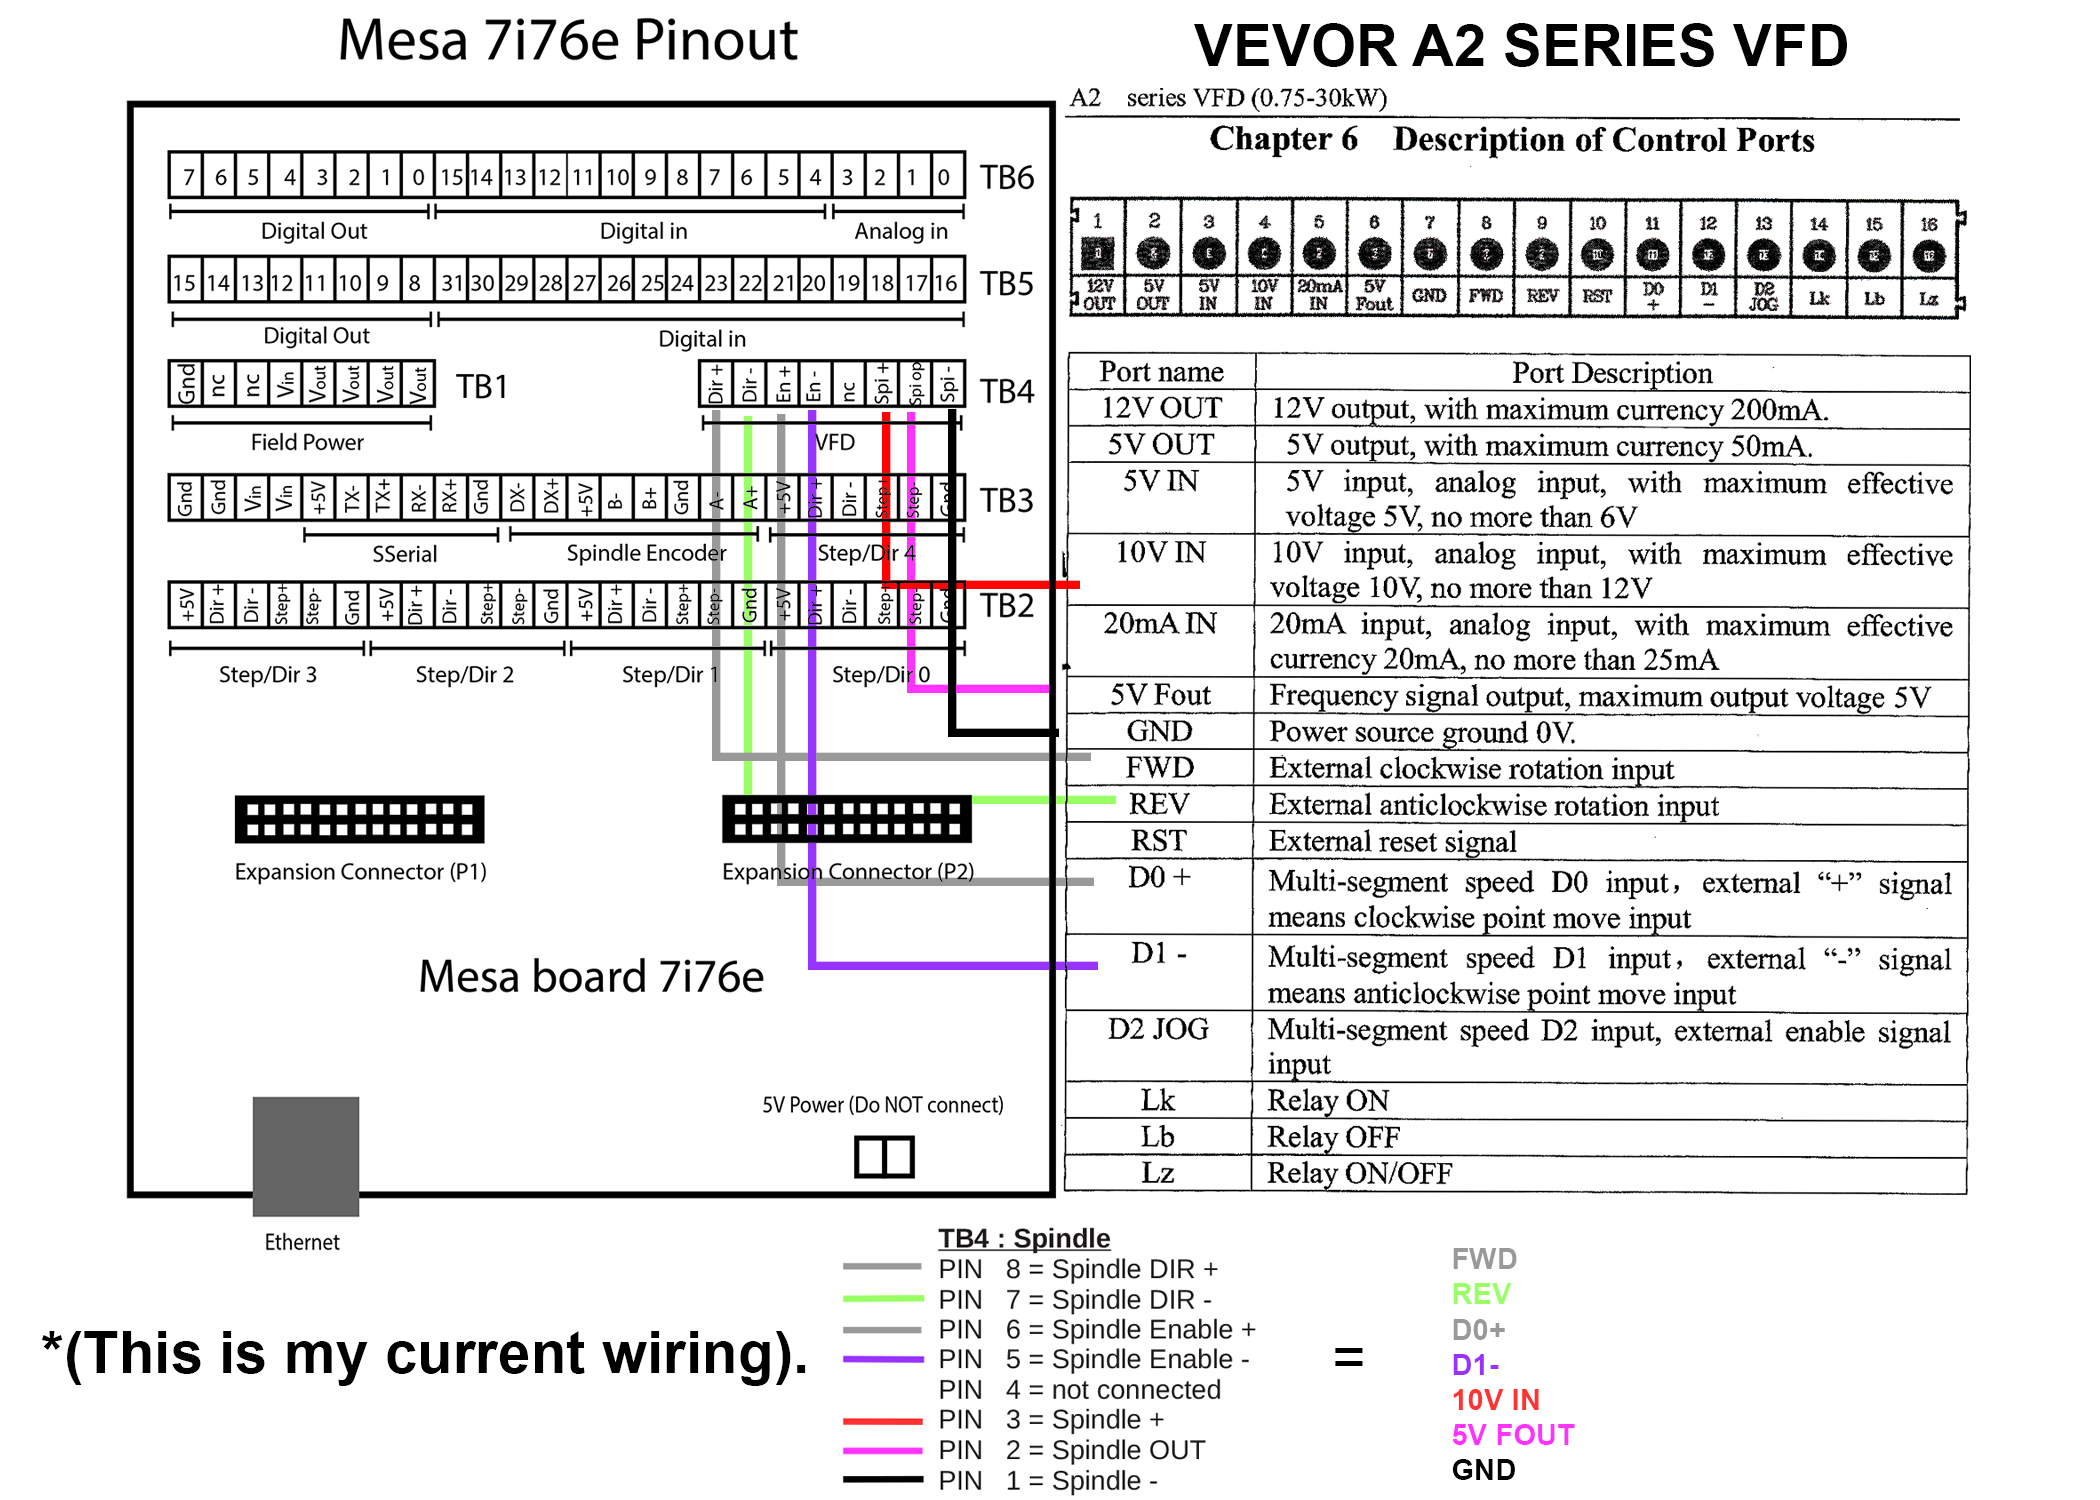 Vevor-A2-Series-VFD-wiring.jpg